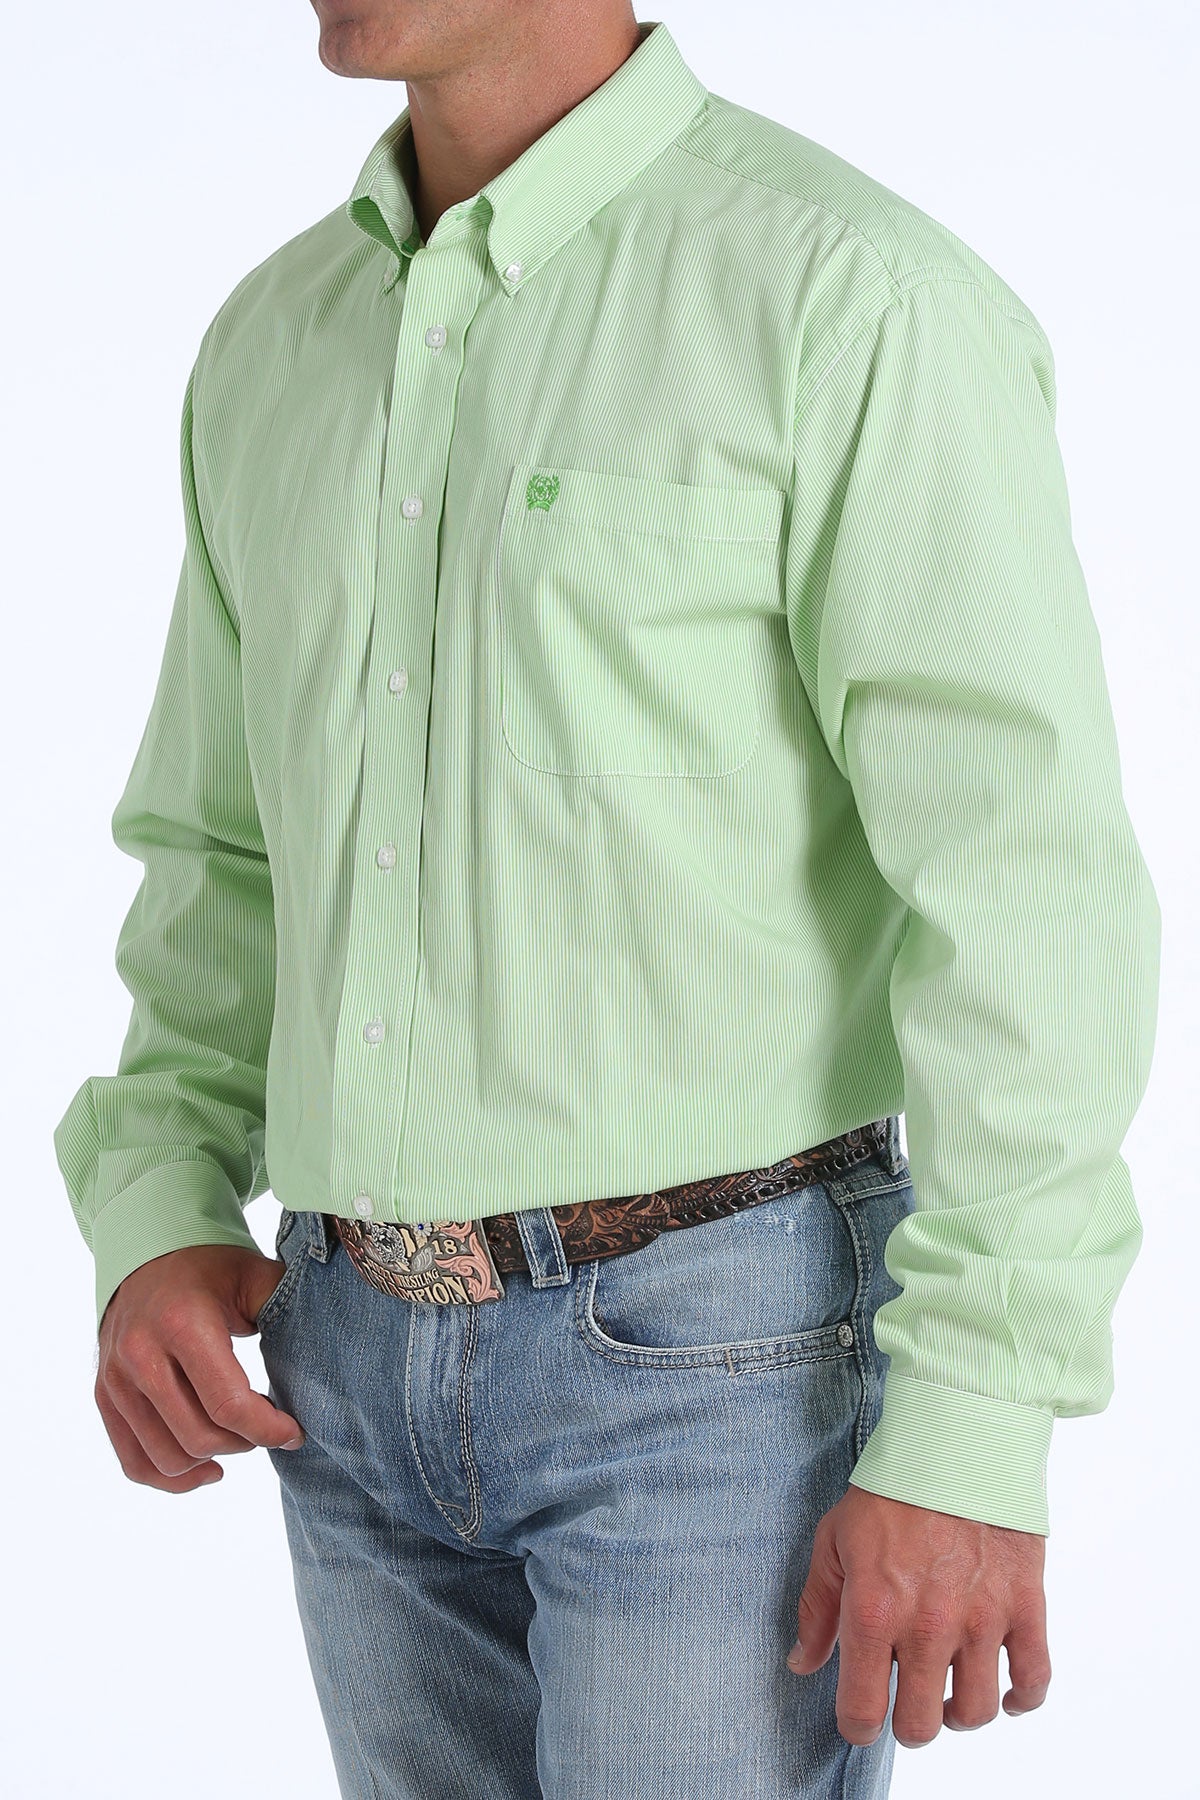 Cinch Men's Lime Green Pinstripe Button-Down Shirt